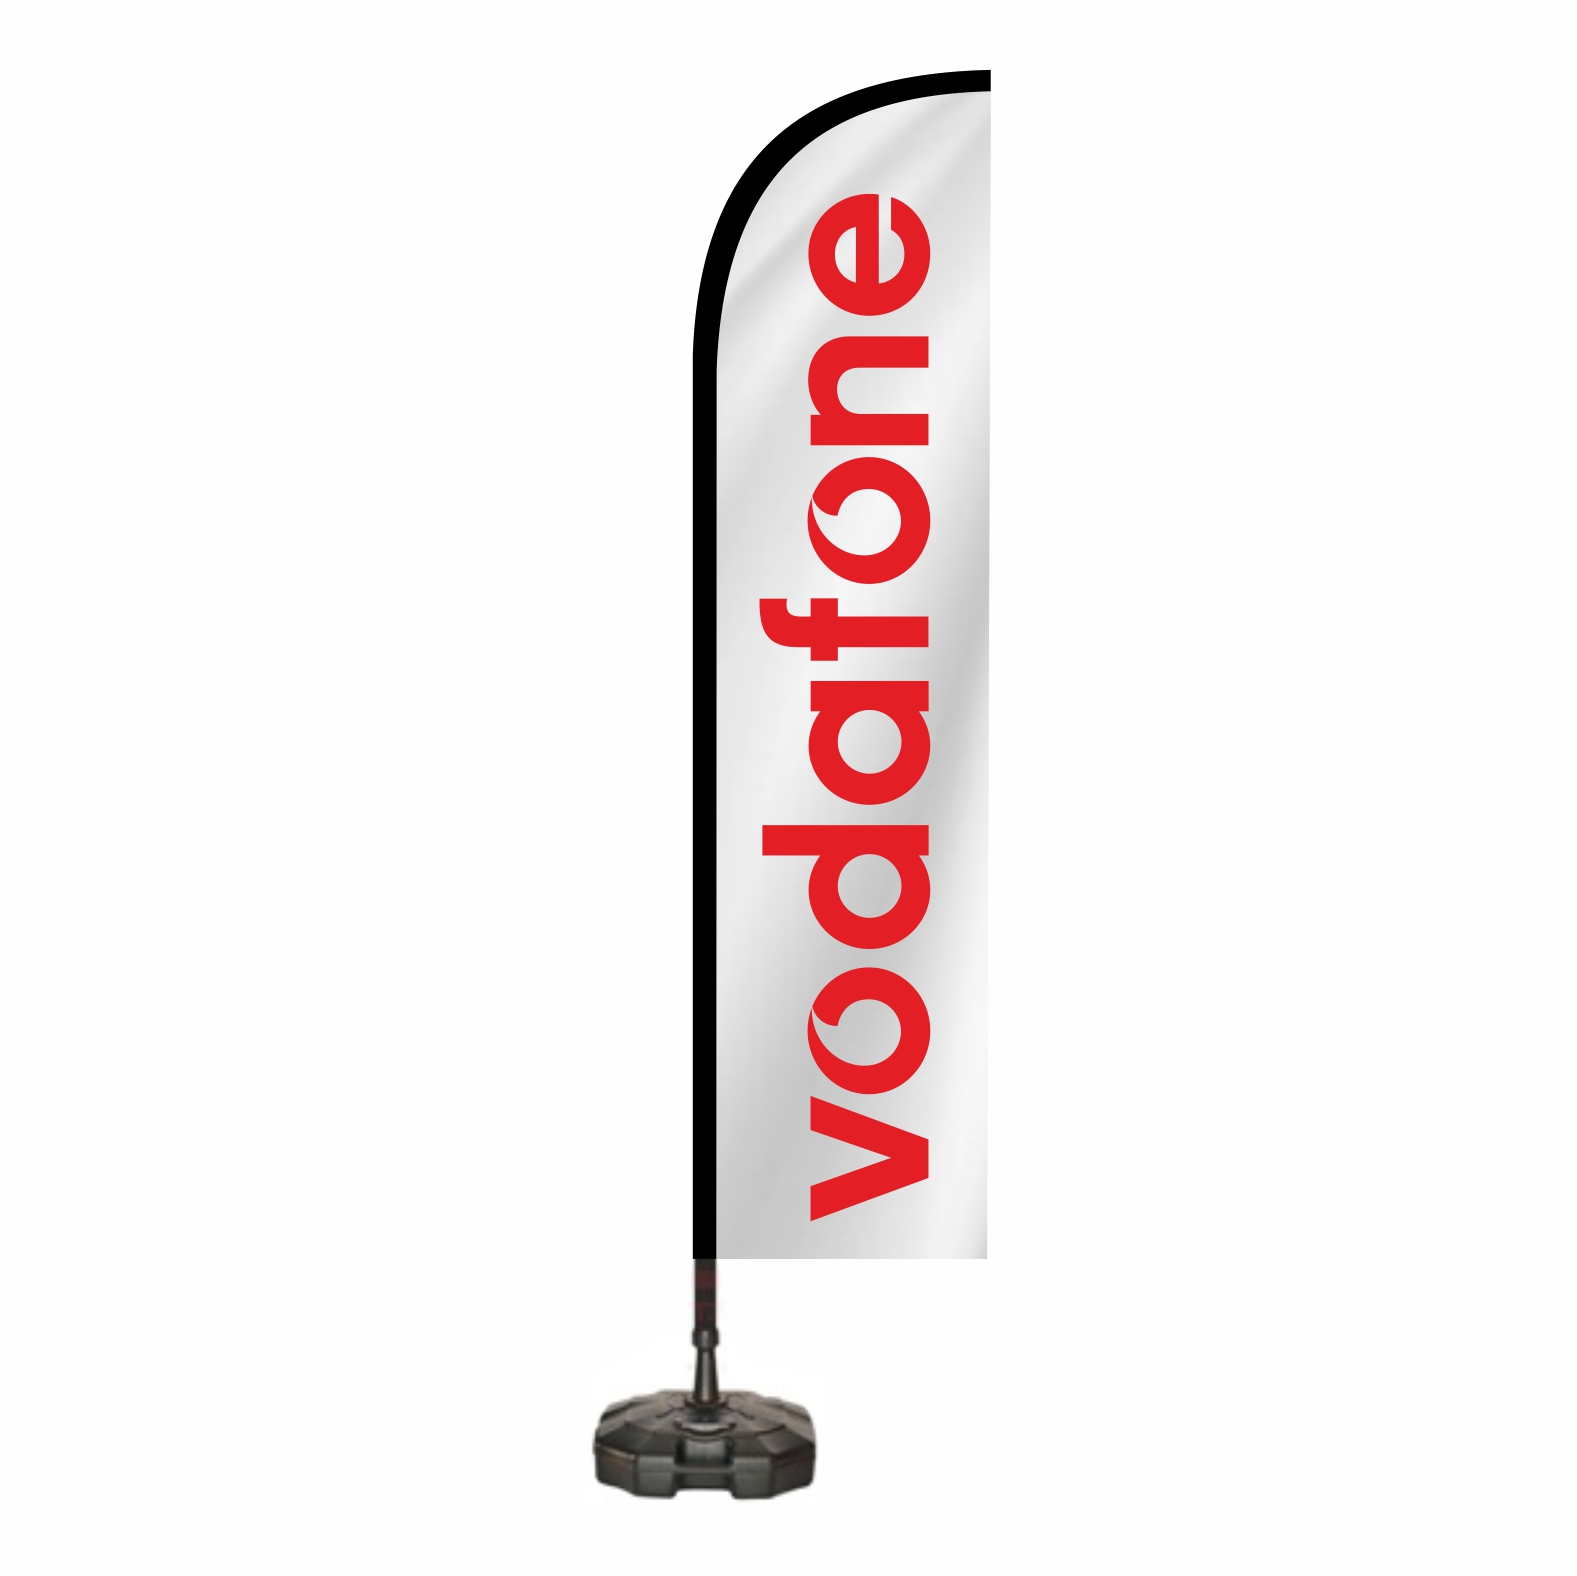 Vodafone Cadde Bayra Nerede Yaptrlr